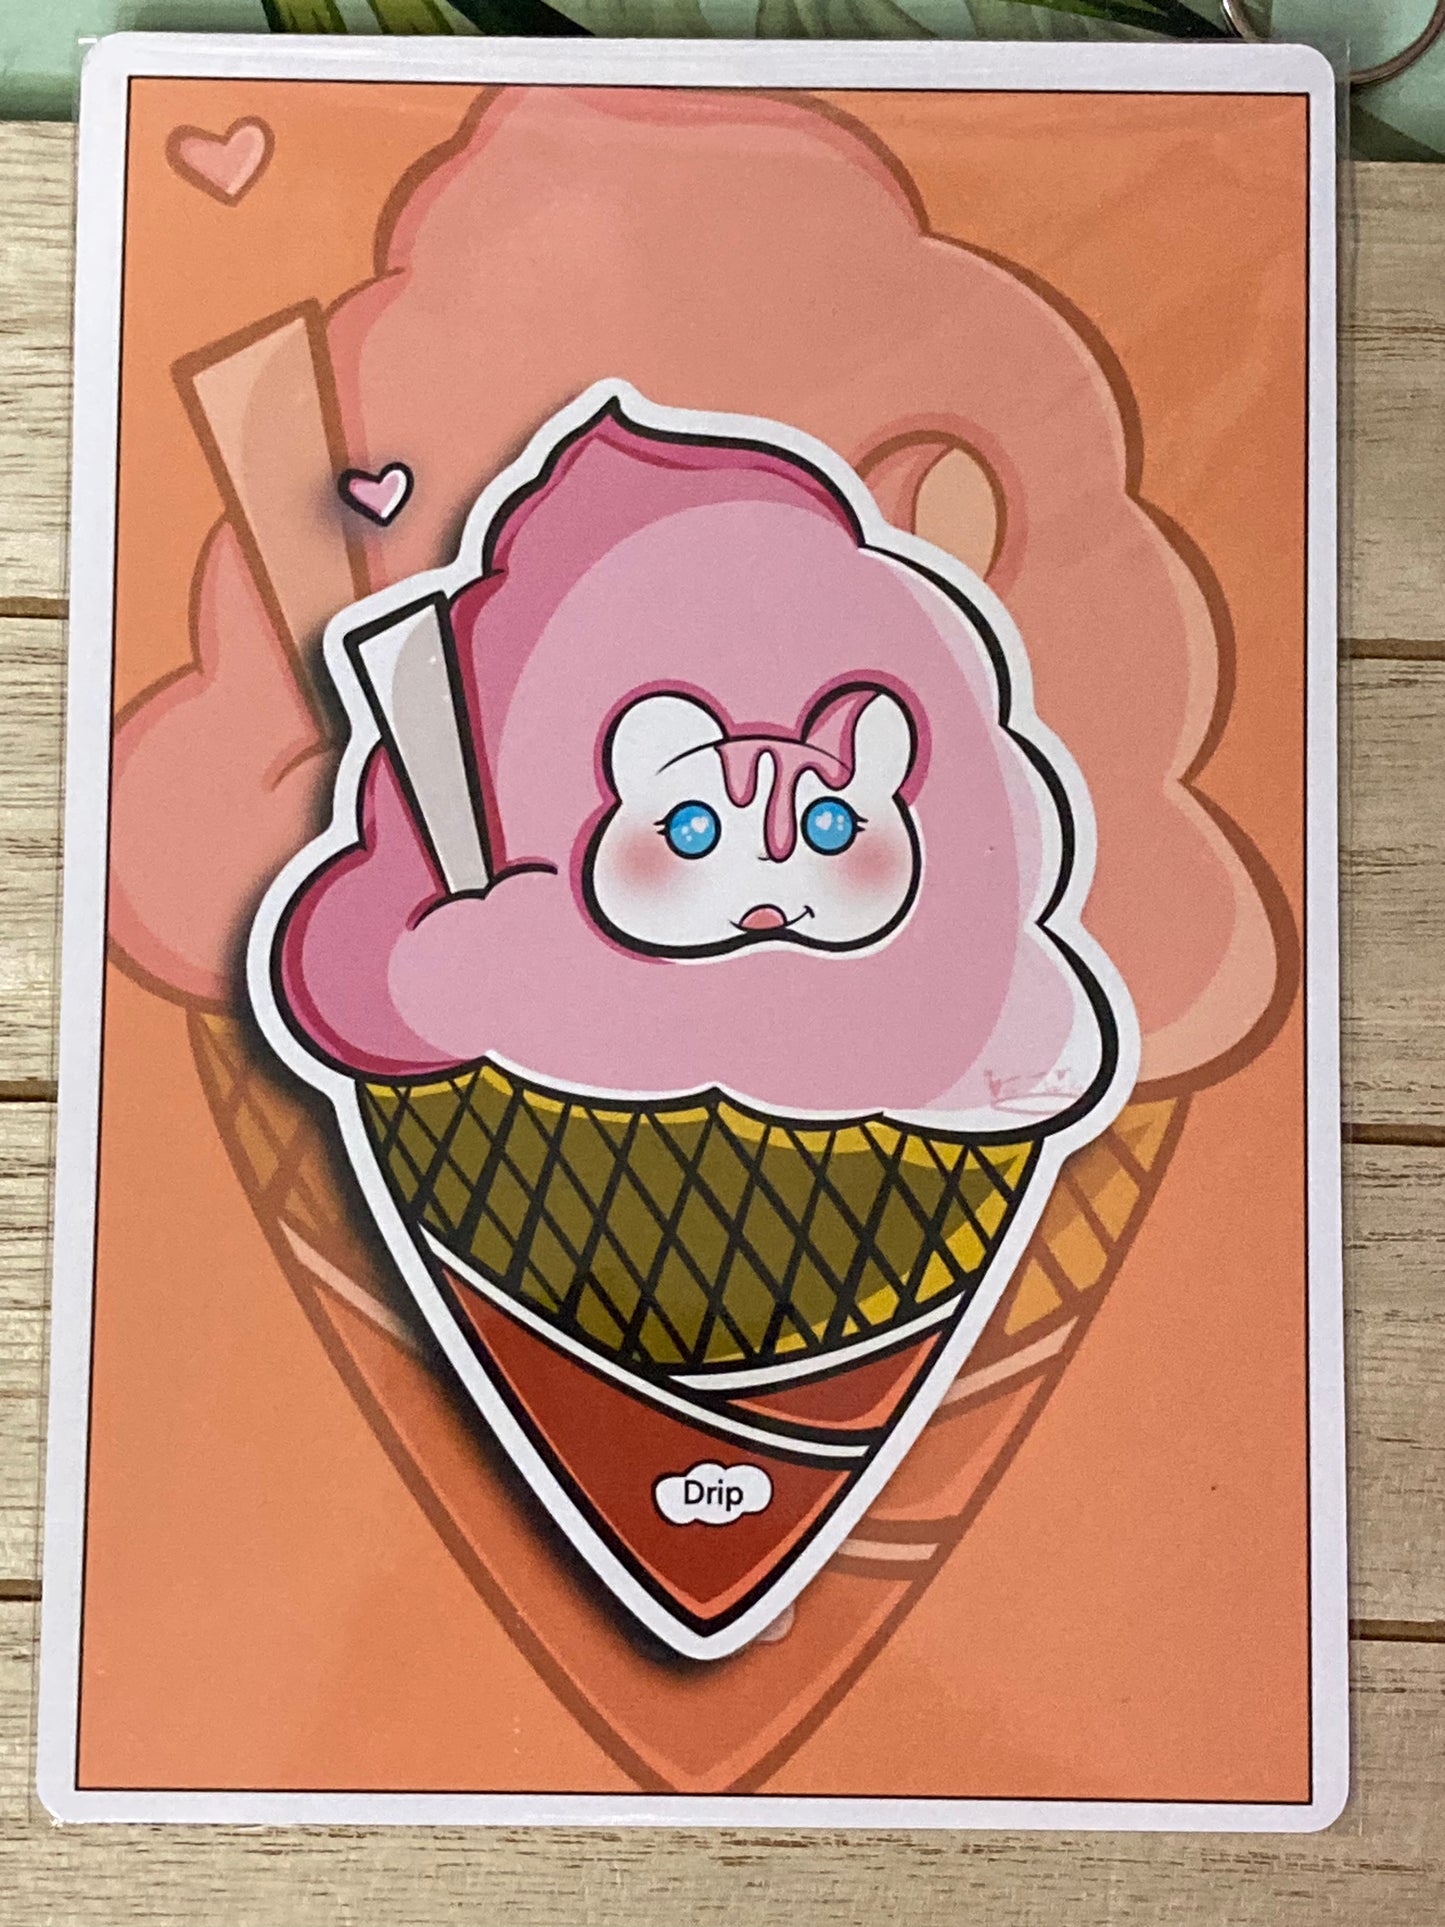 Drip Ice Cream Cone Print